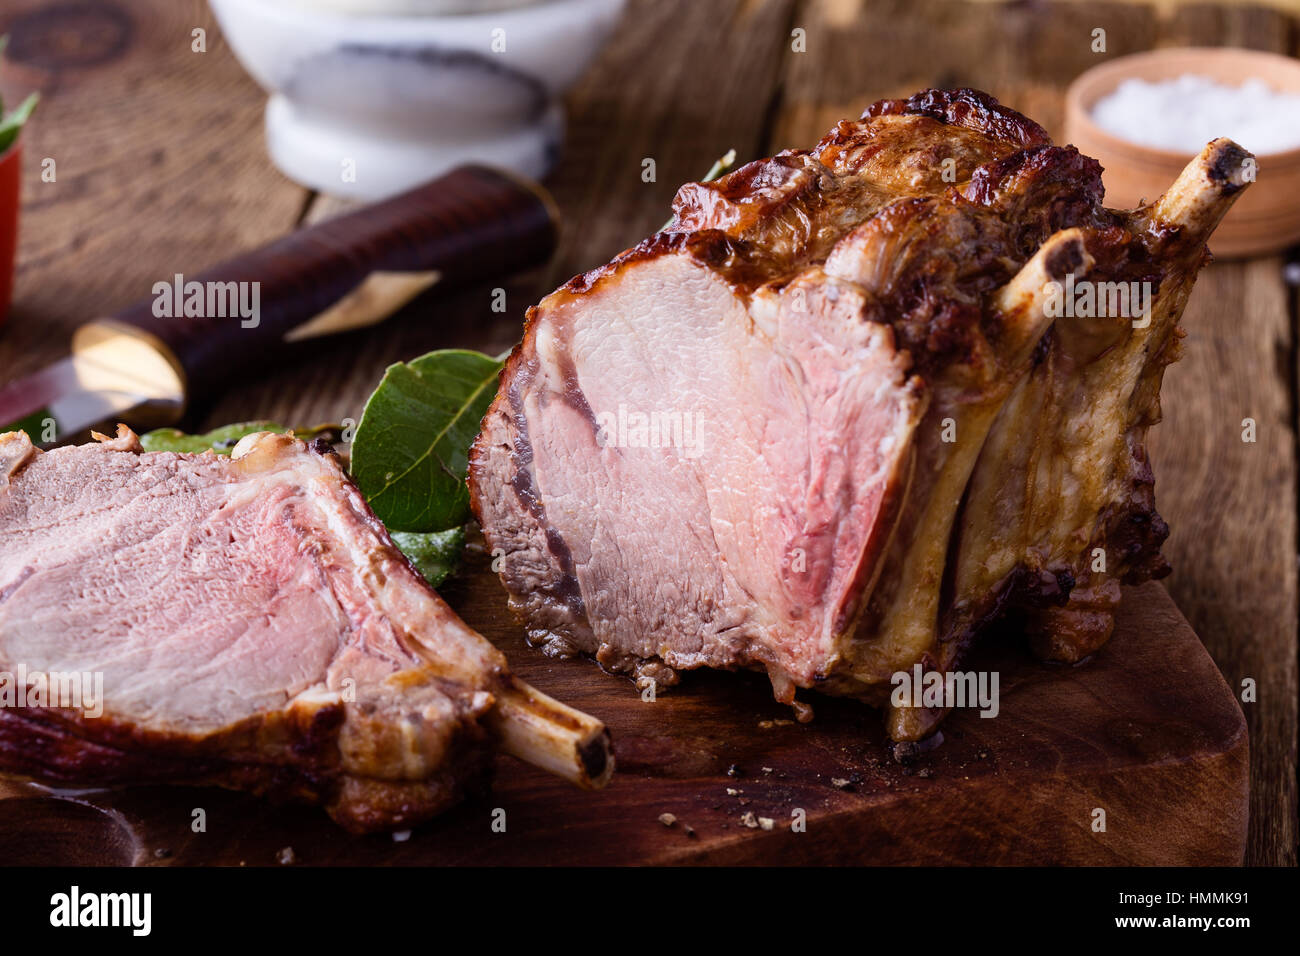 https://c8.alamy.com/comp/HMMK91/homemade-bone-in-prime-rib-roast-on-rustic-wooden-table-HMMK91.jpg